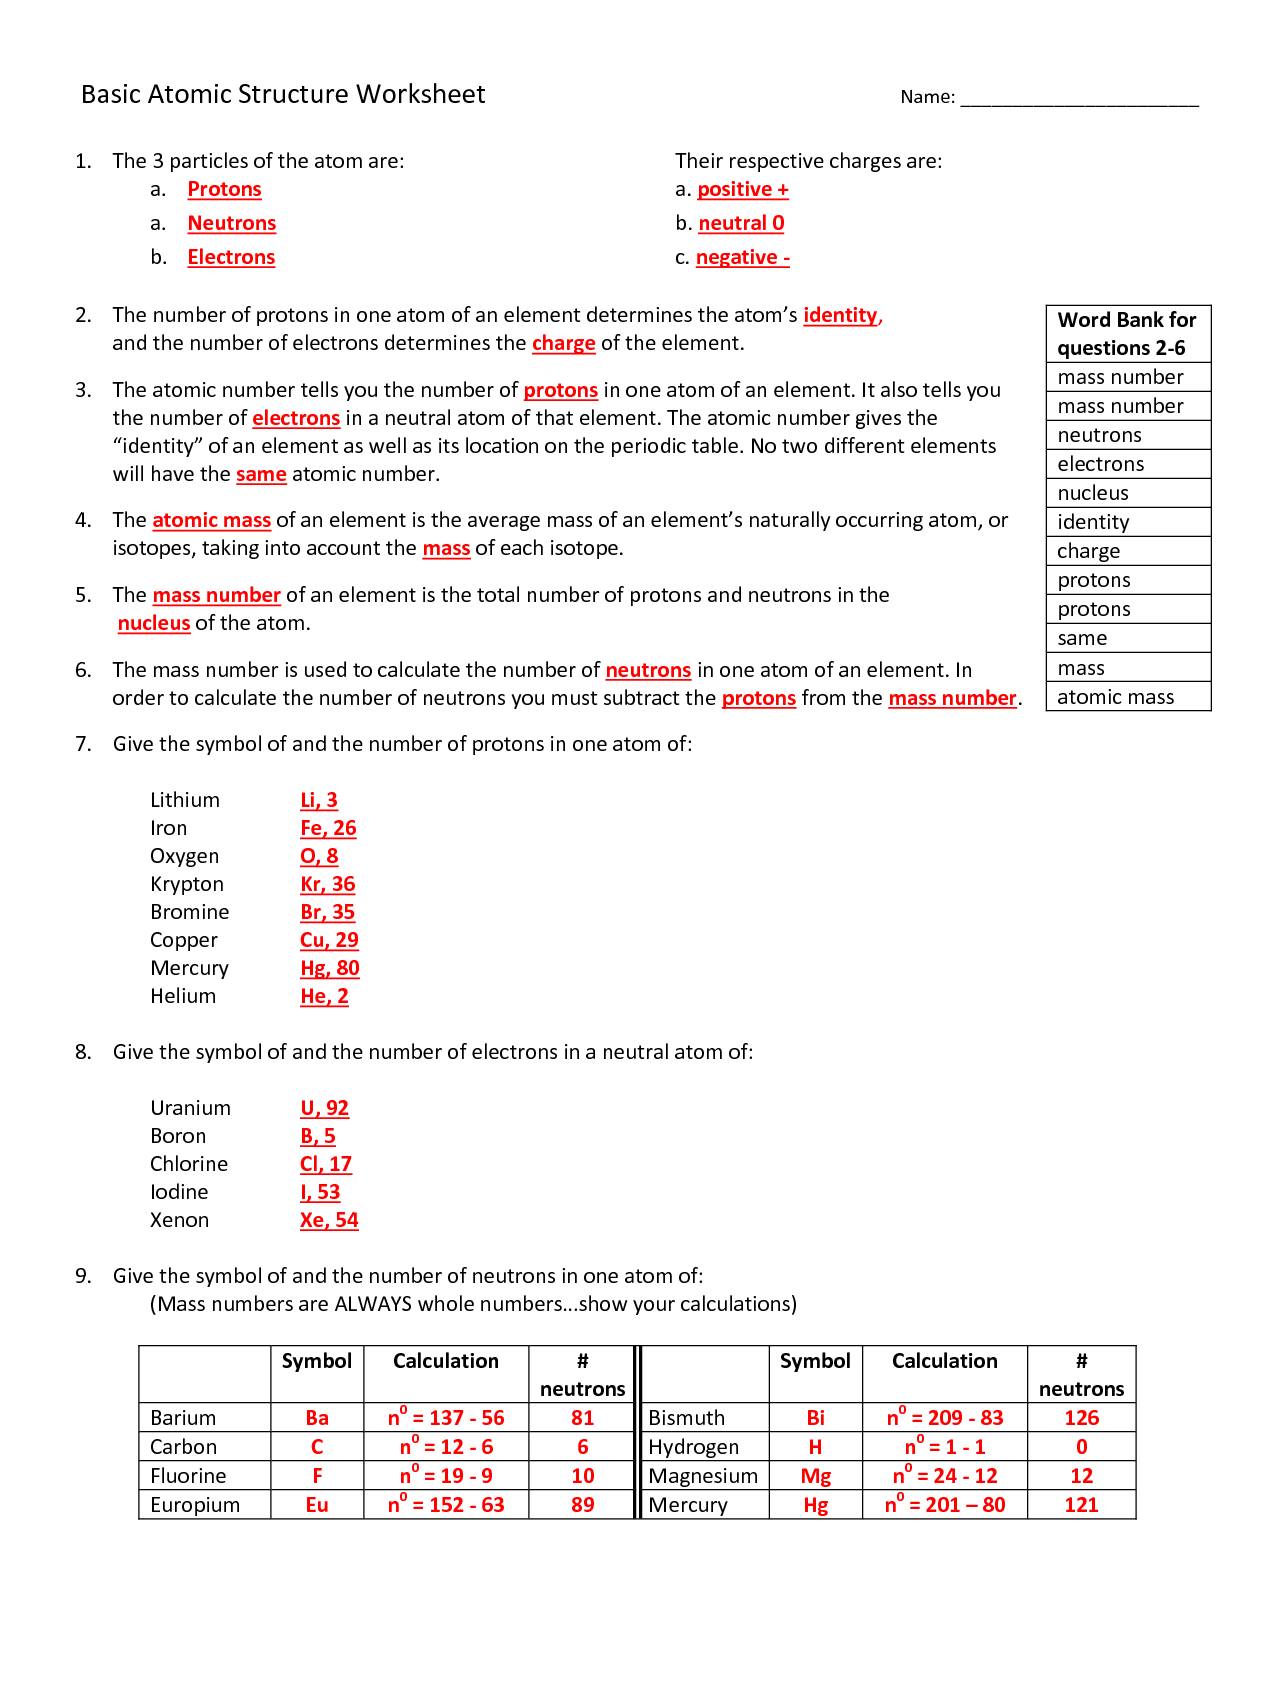 11-atom-worksheets-with-answer-keys-worksheeto